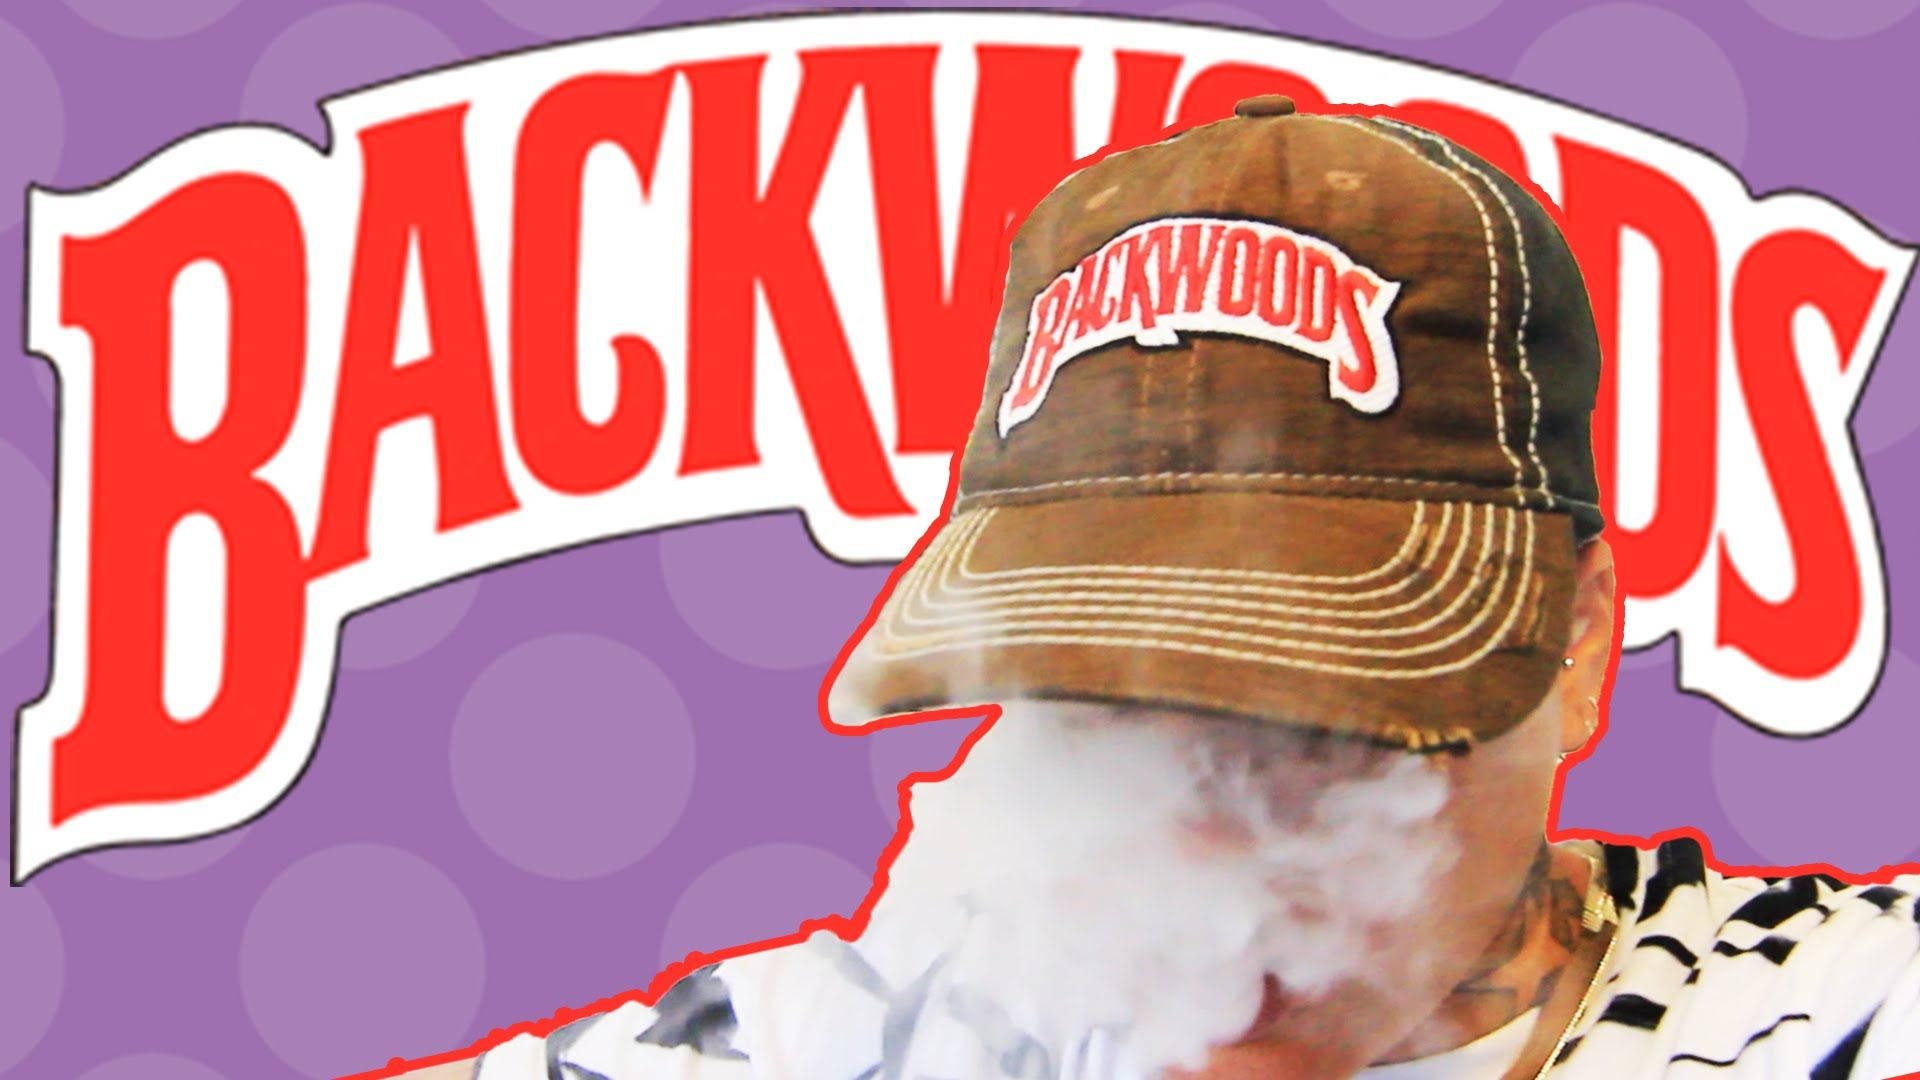 Smoking Backwoods Cigars Wallpaper